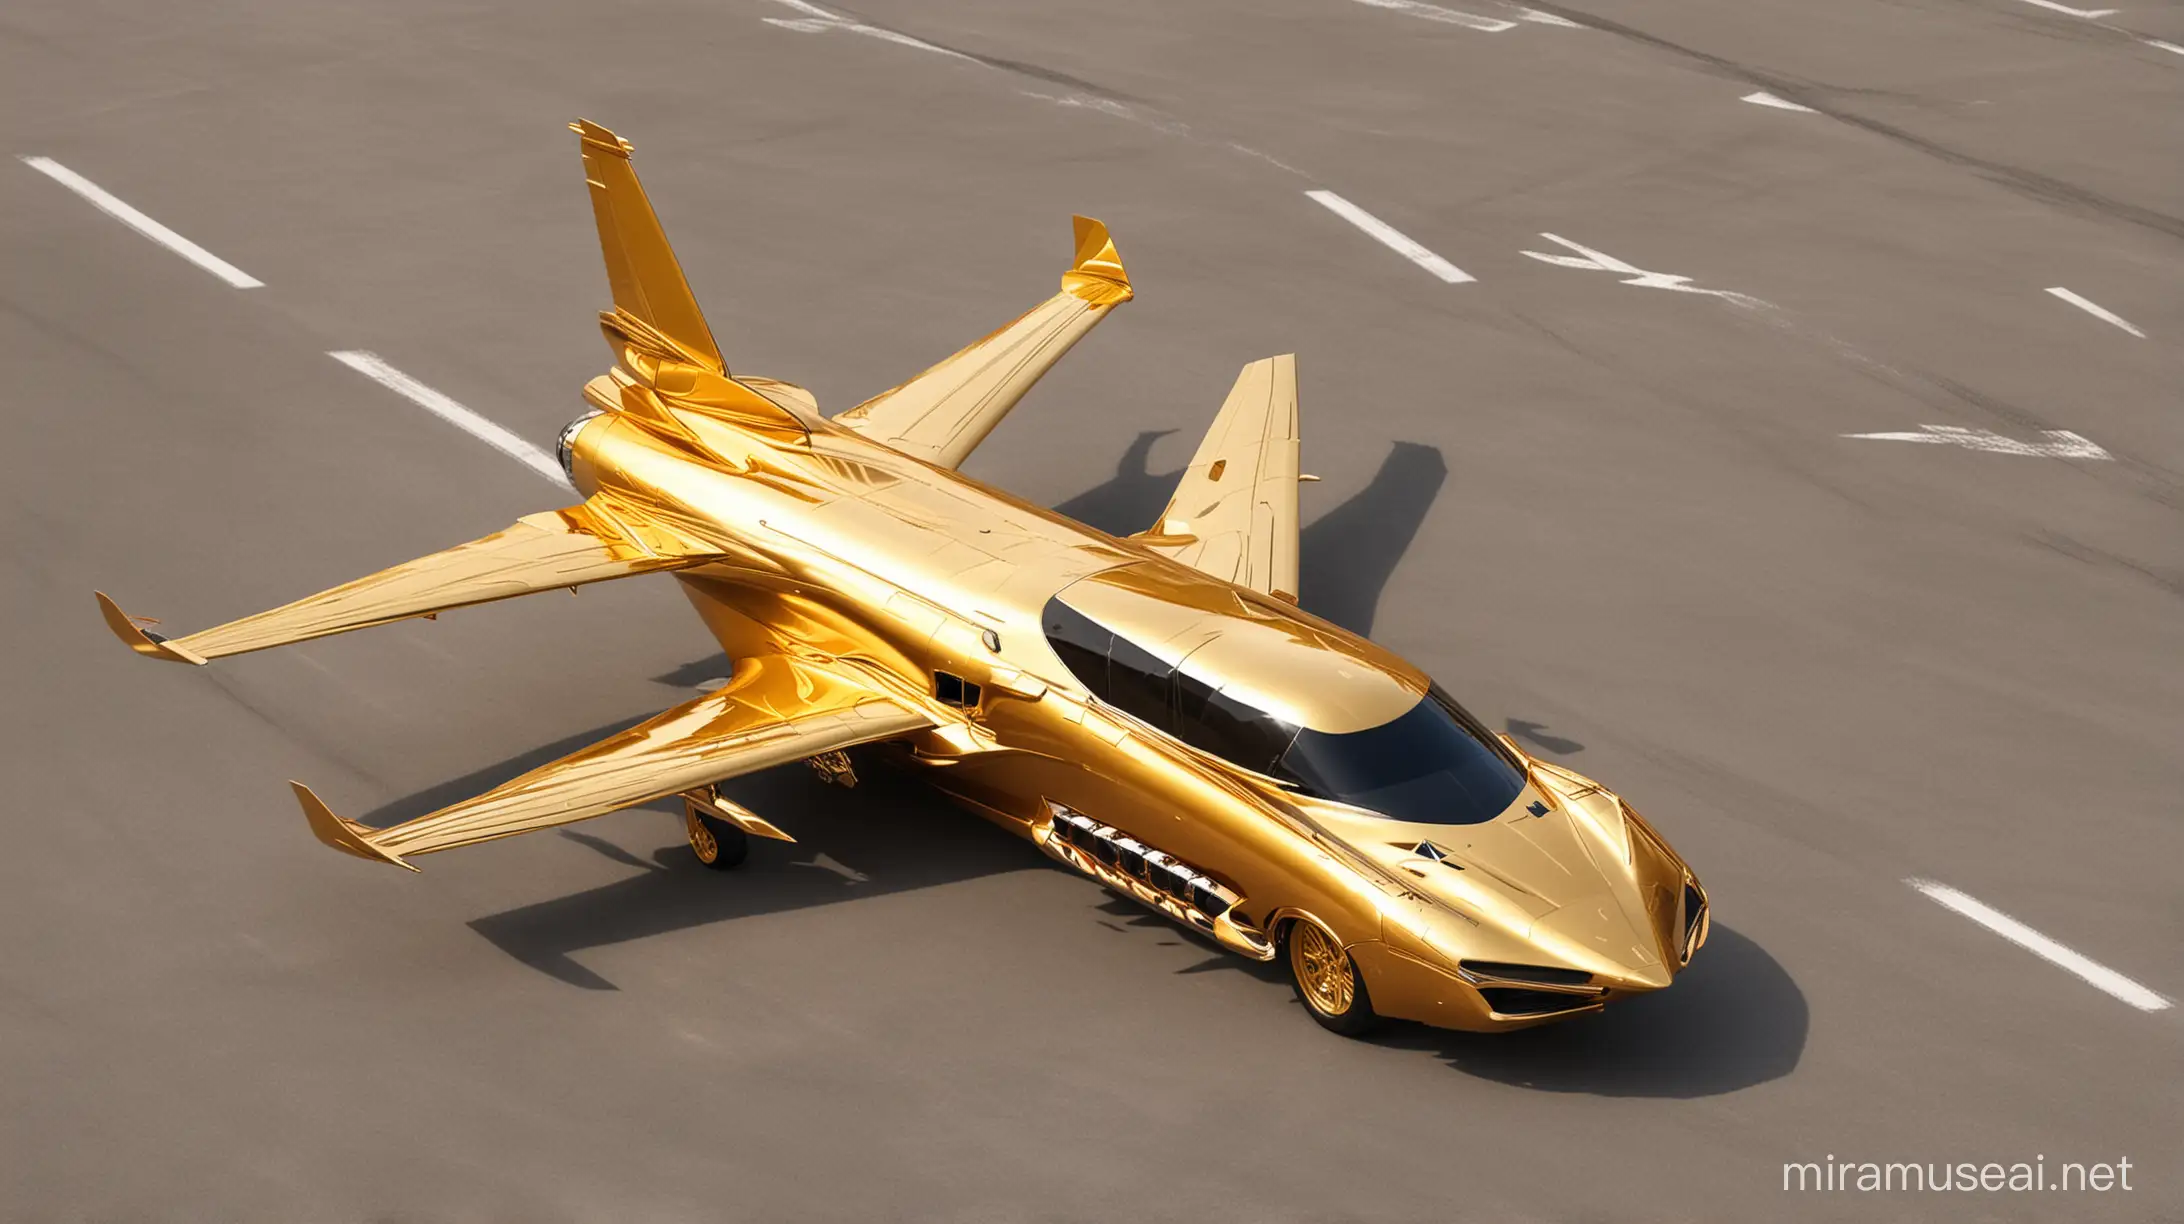 Golden Jet with golden car